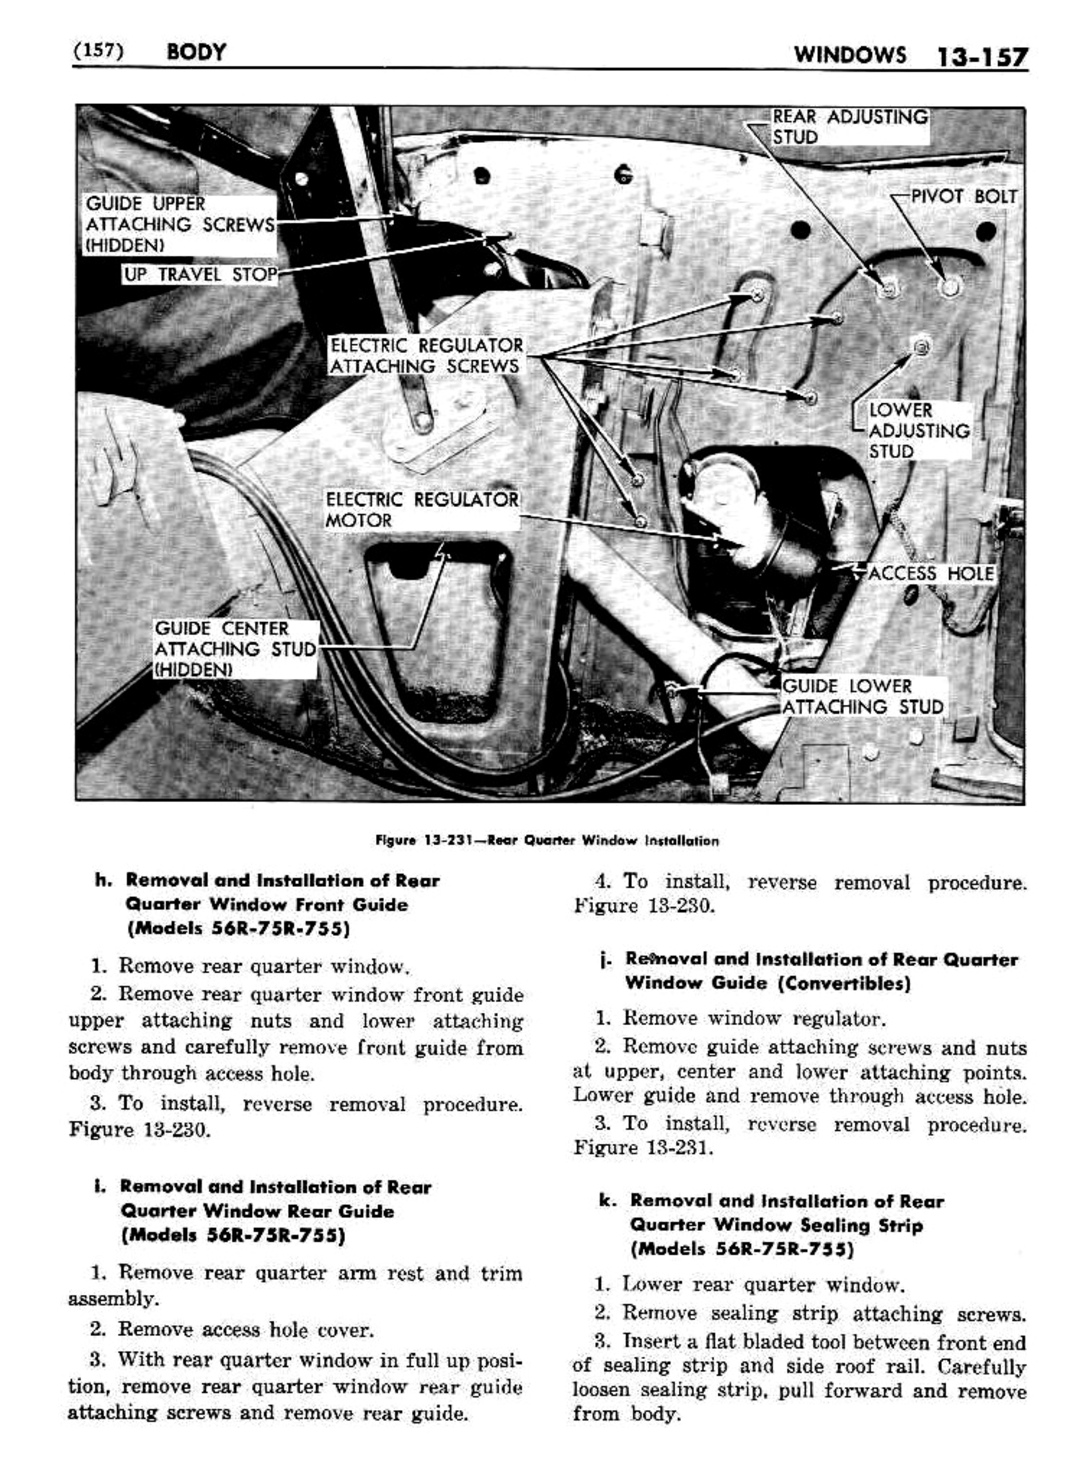 n_1958 Buick Body Service Manual-158-158.jpg